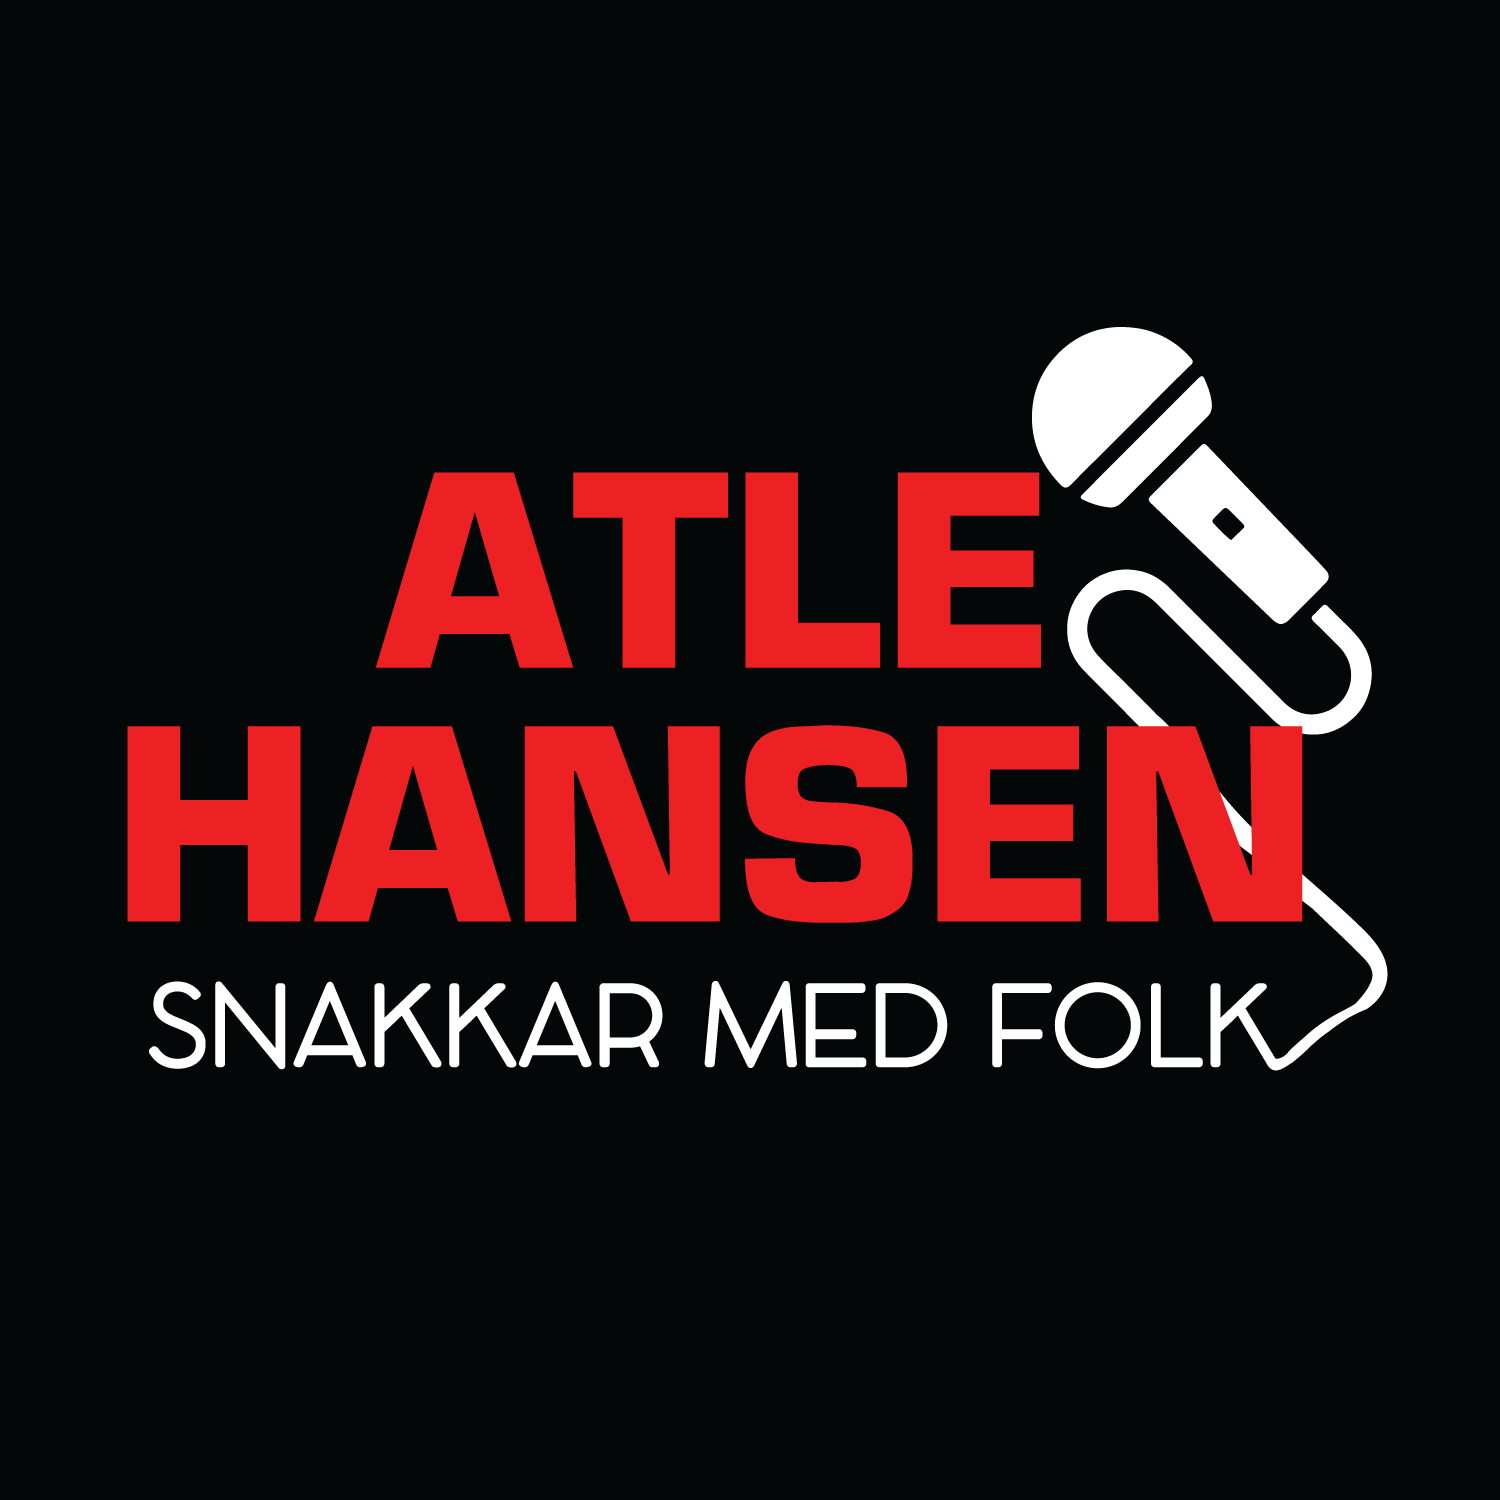 Atle Hansen snakkar med folk